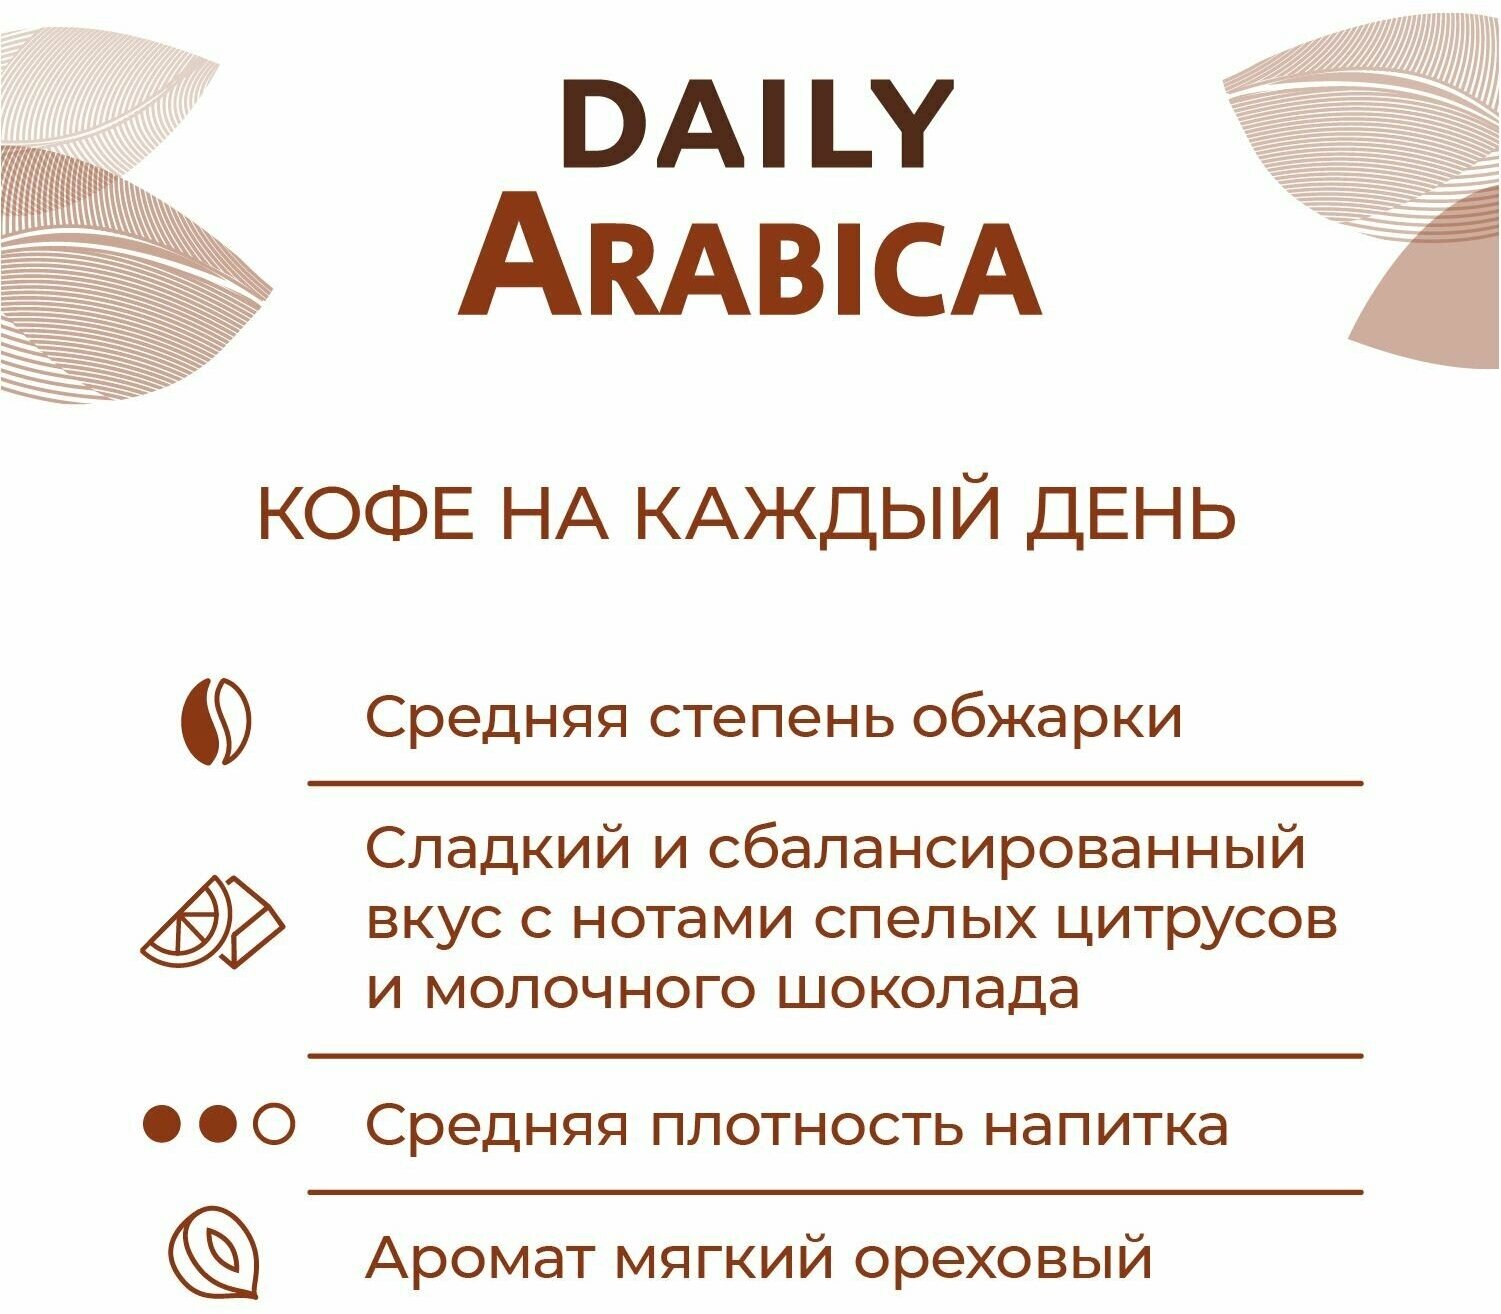 Кофе молотый Poetti Daily Arabica, для чашки, натуральный, жареный, 250 г - фотография № 4